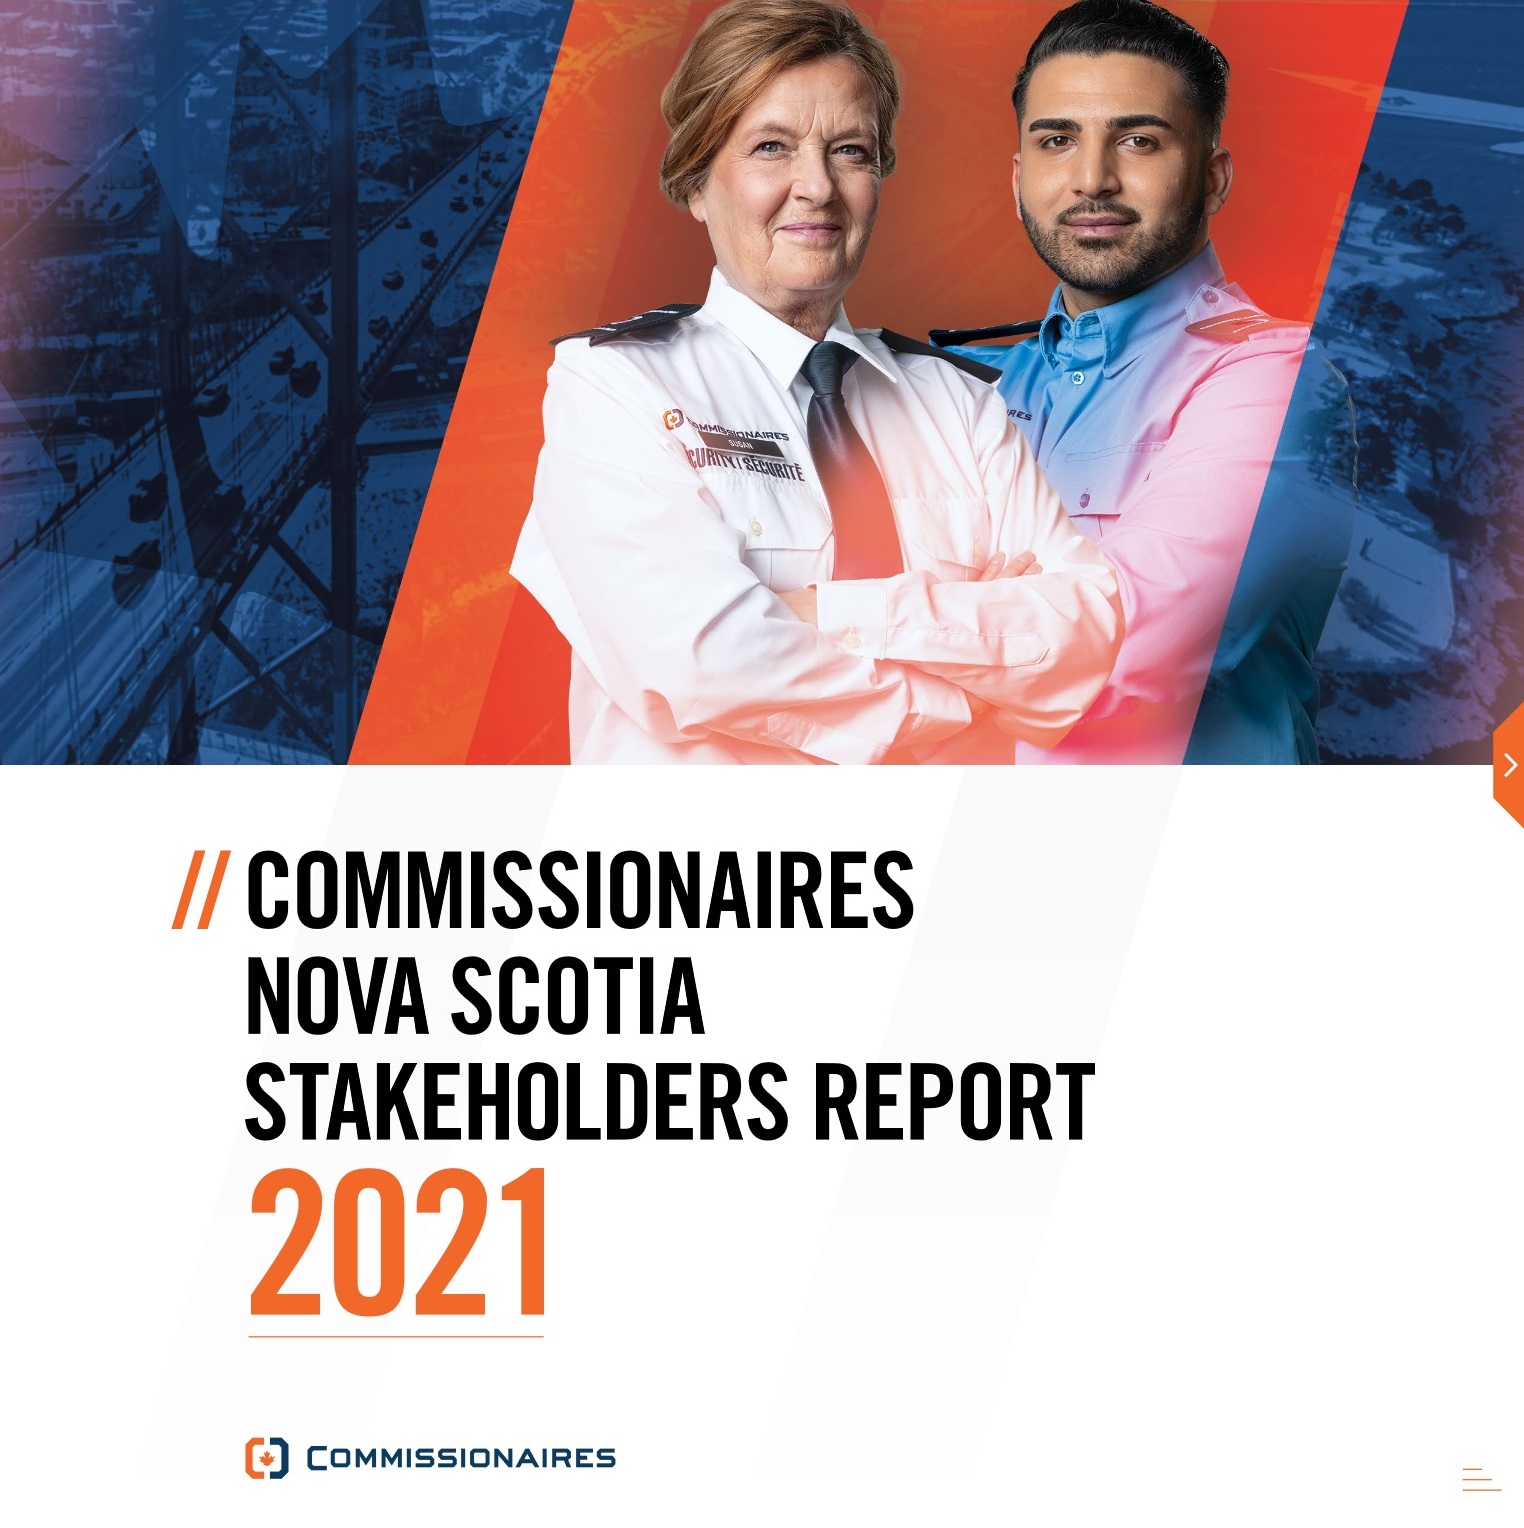 Stakeholders Report 2021